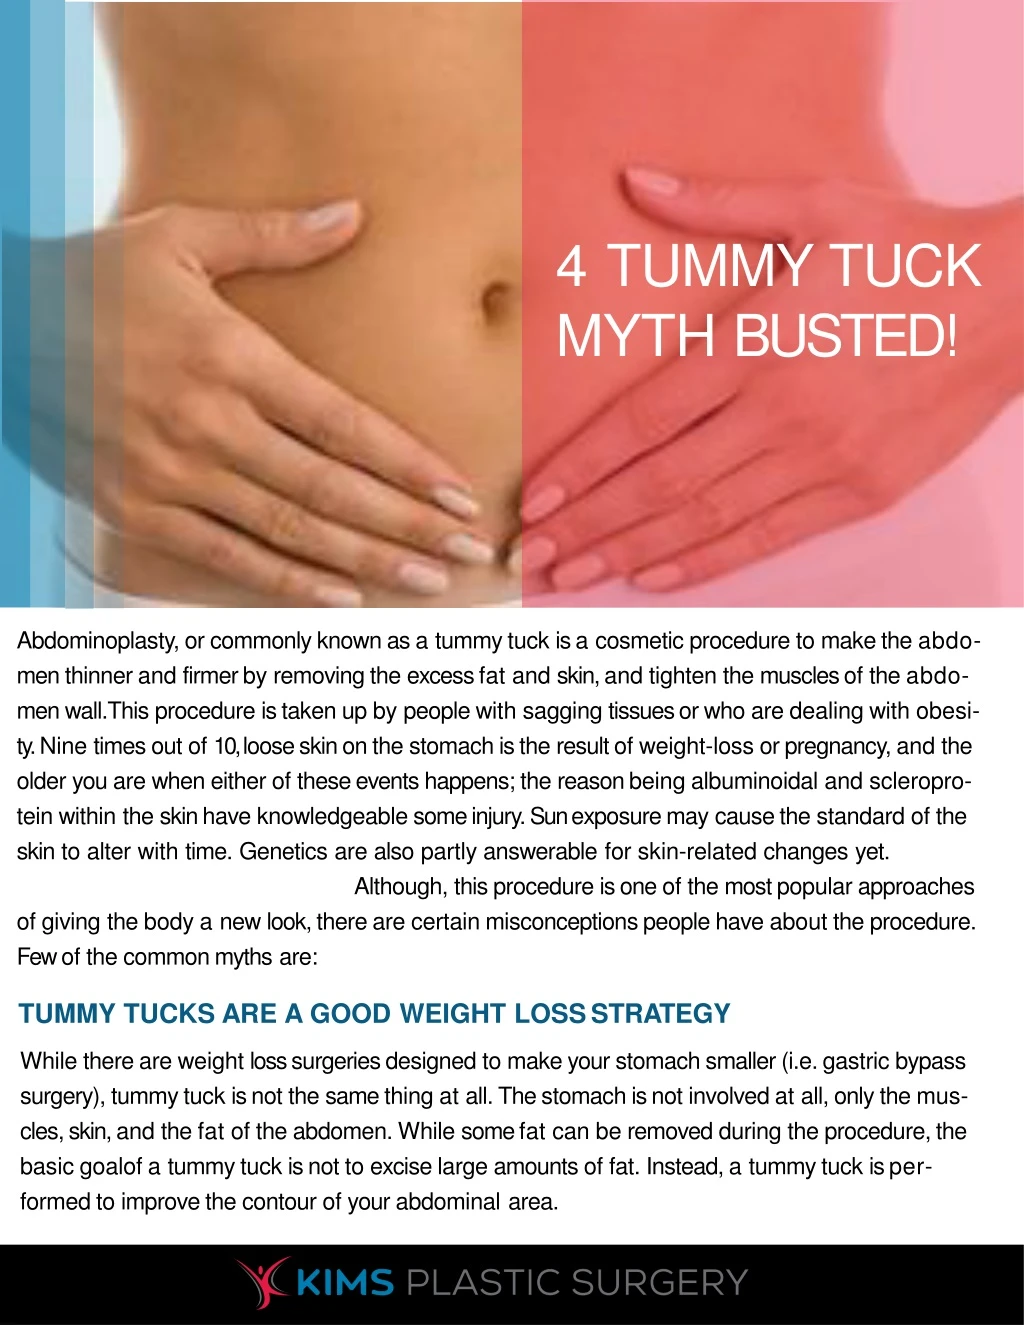 4 tummy tuck myth busted